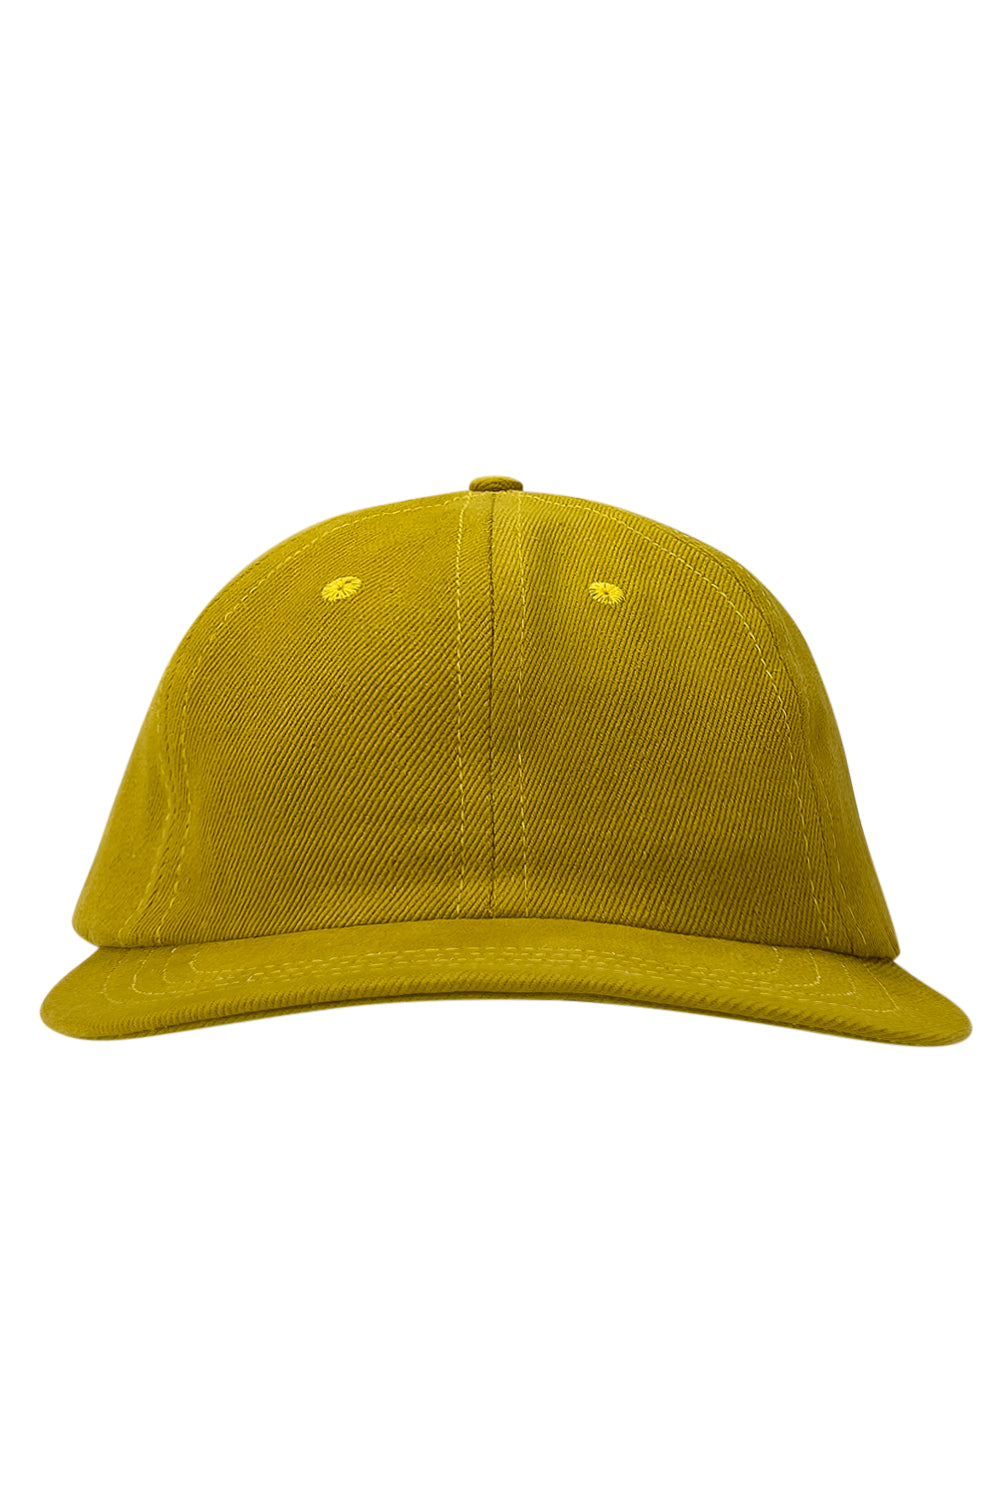 Chenga Twill Cap | Jungmaven Hemp Clothing & Accessories / Color: Citrine Yellow